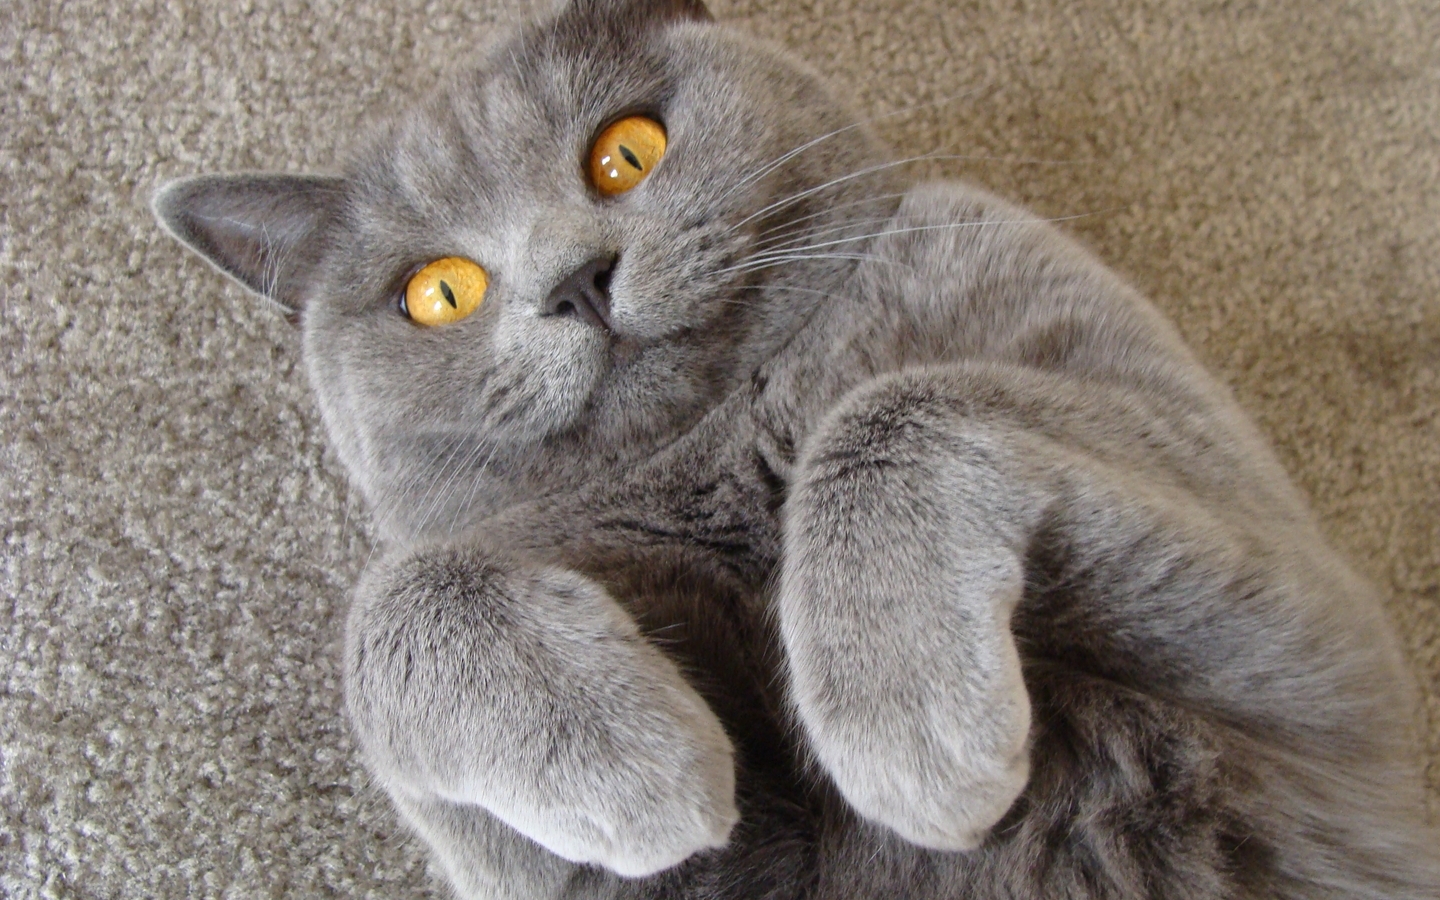 Image: Cat, whiskers, wool, british, carpet, curly, yellow eyes